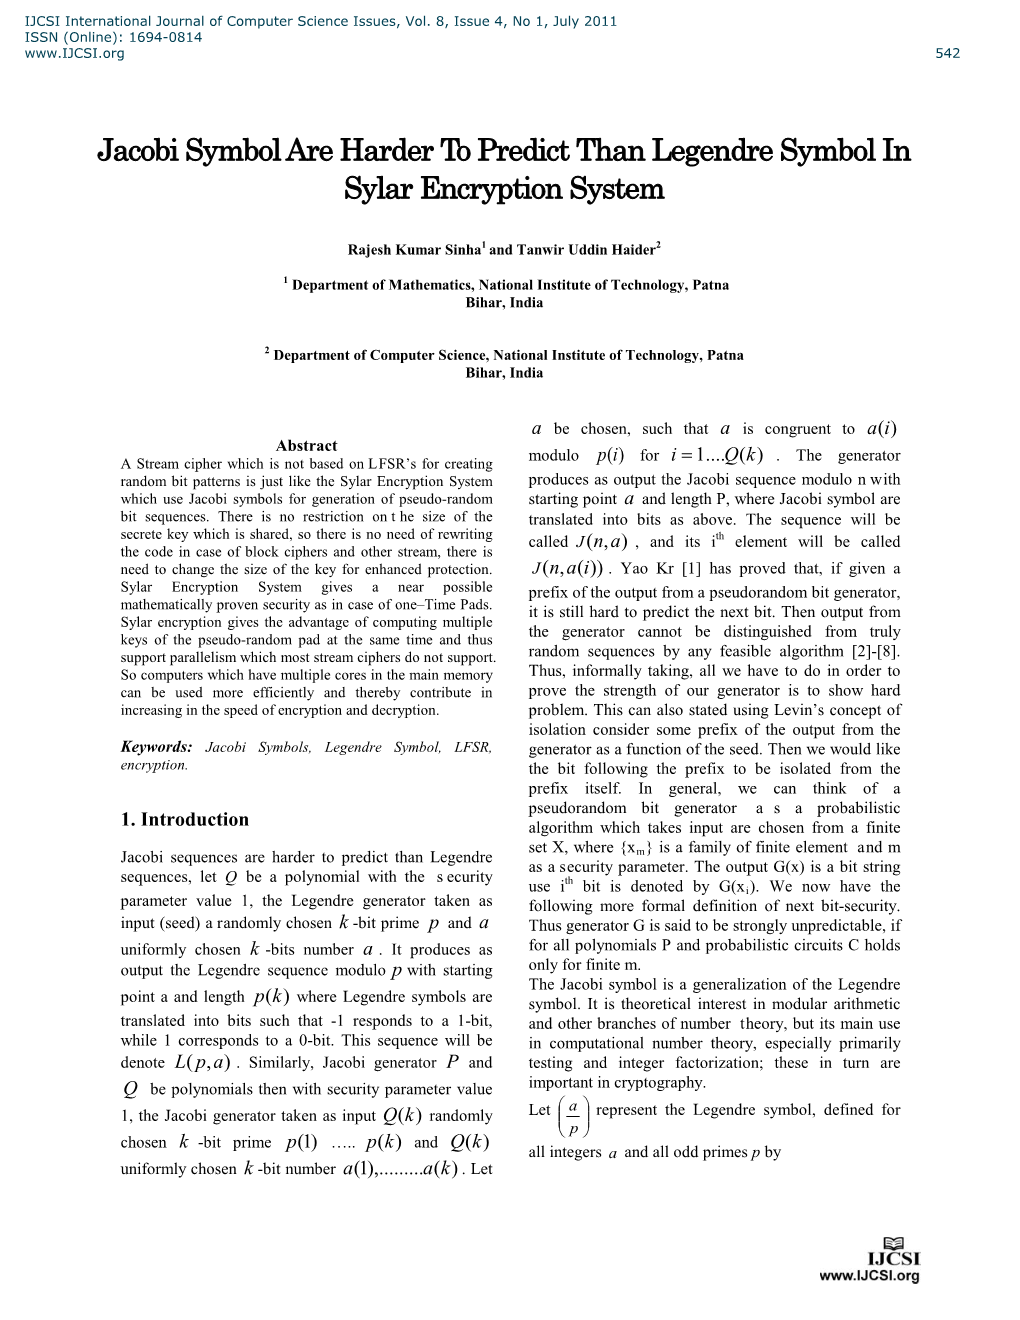 Jacobi Symbol Are Harder to Predict Than Legendre Symbol in Sylar Encryption System